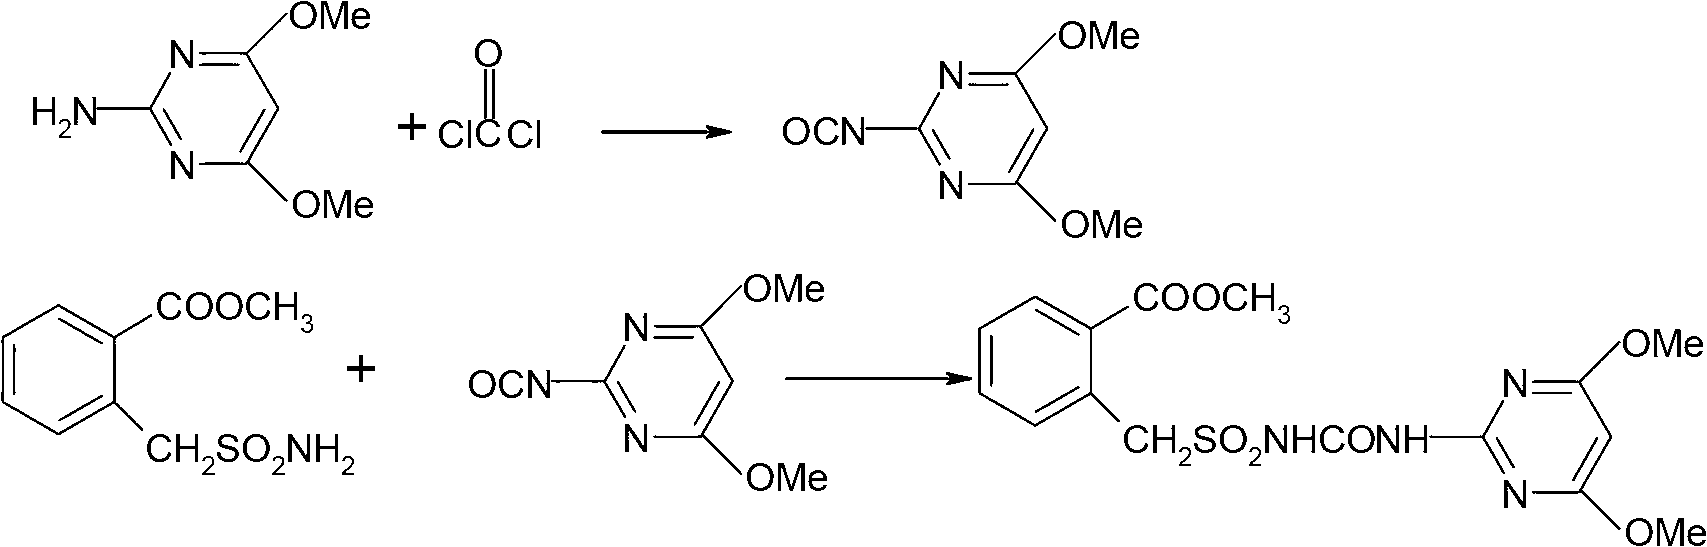 Method for preparing bensulfuron methyl